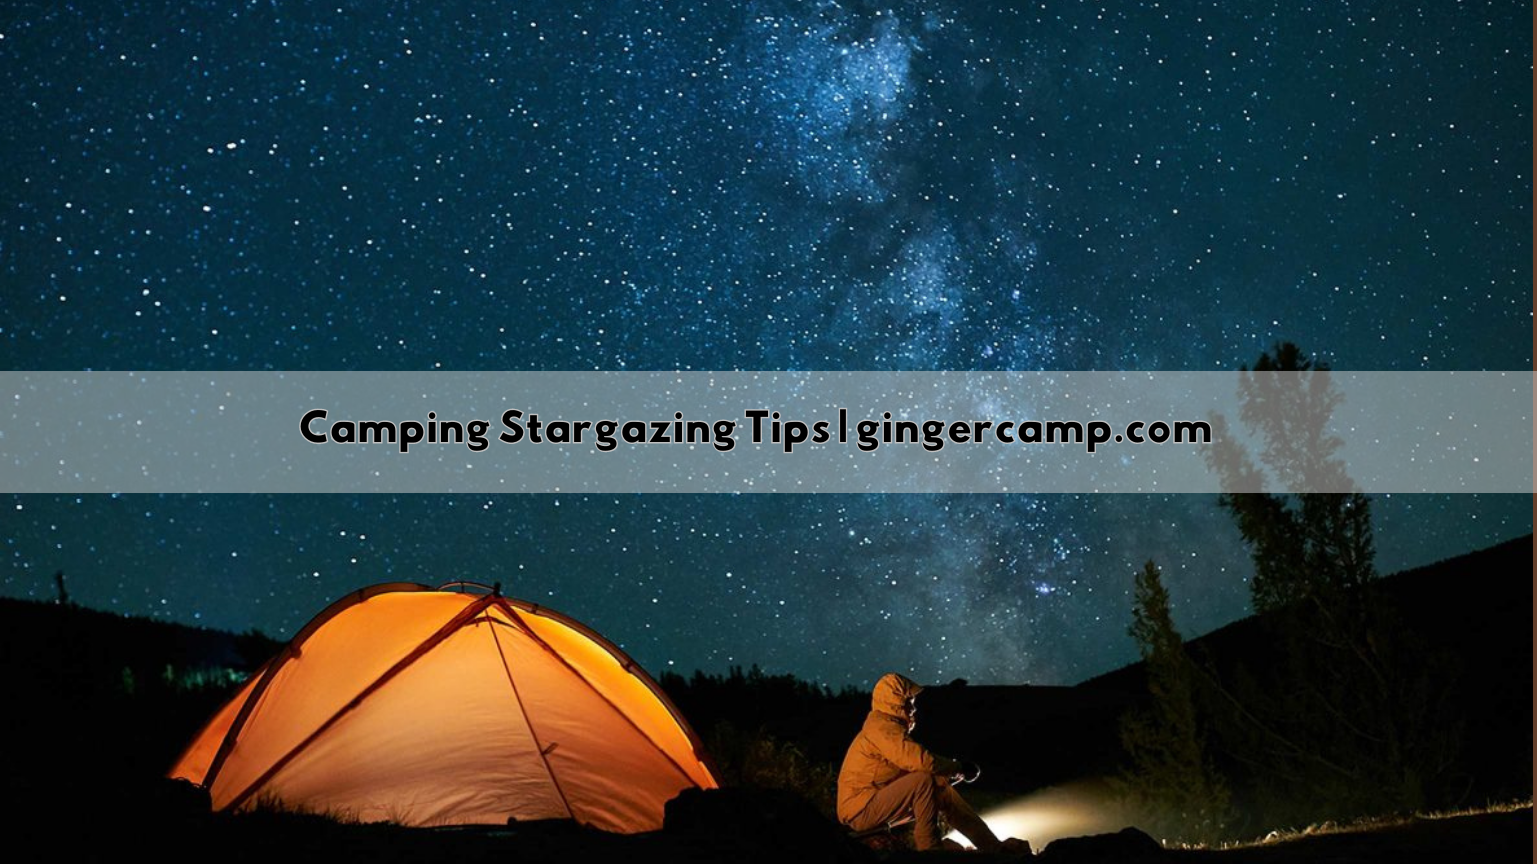 Camping Stargazing Tips